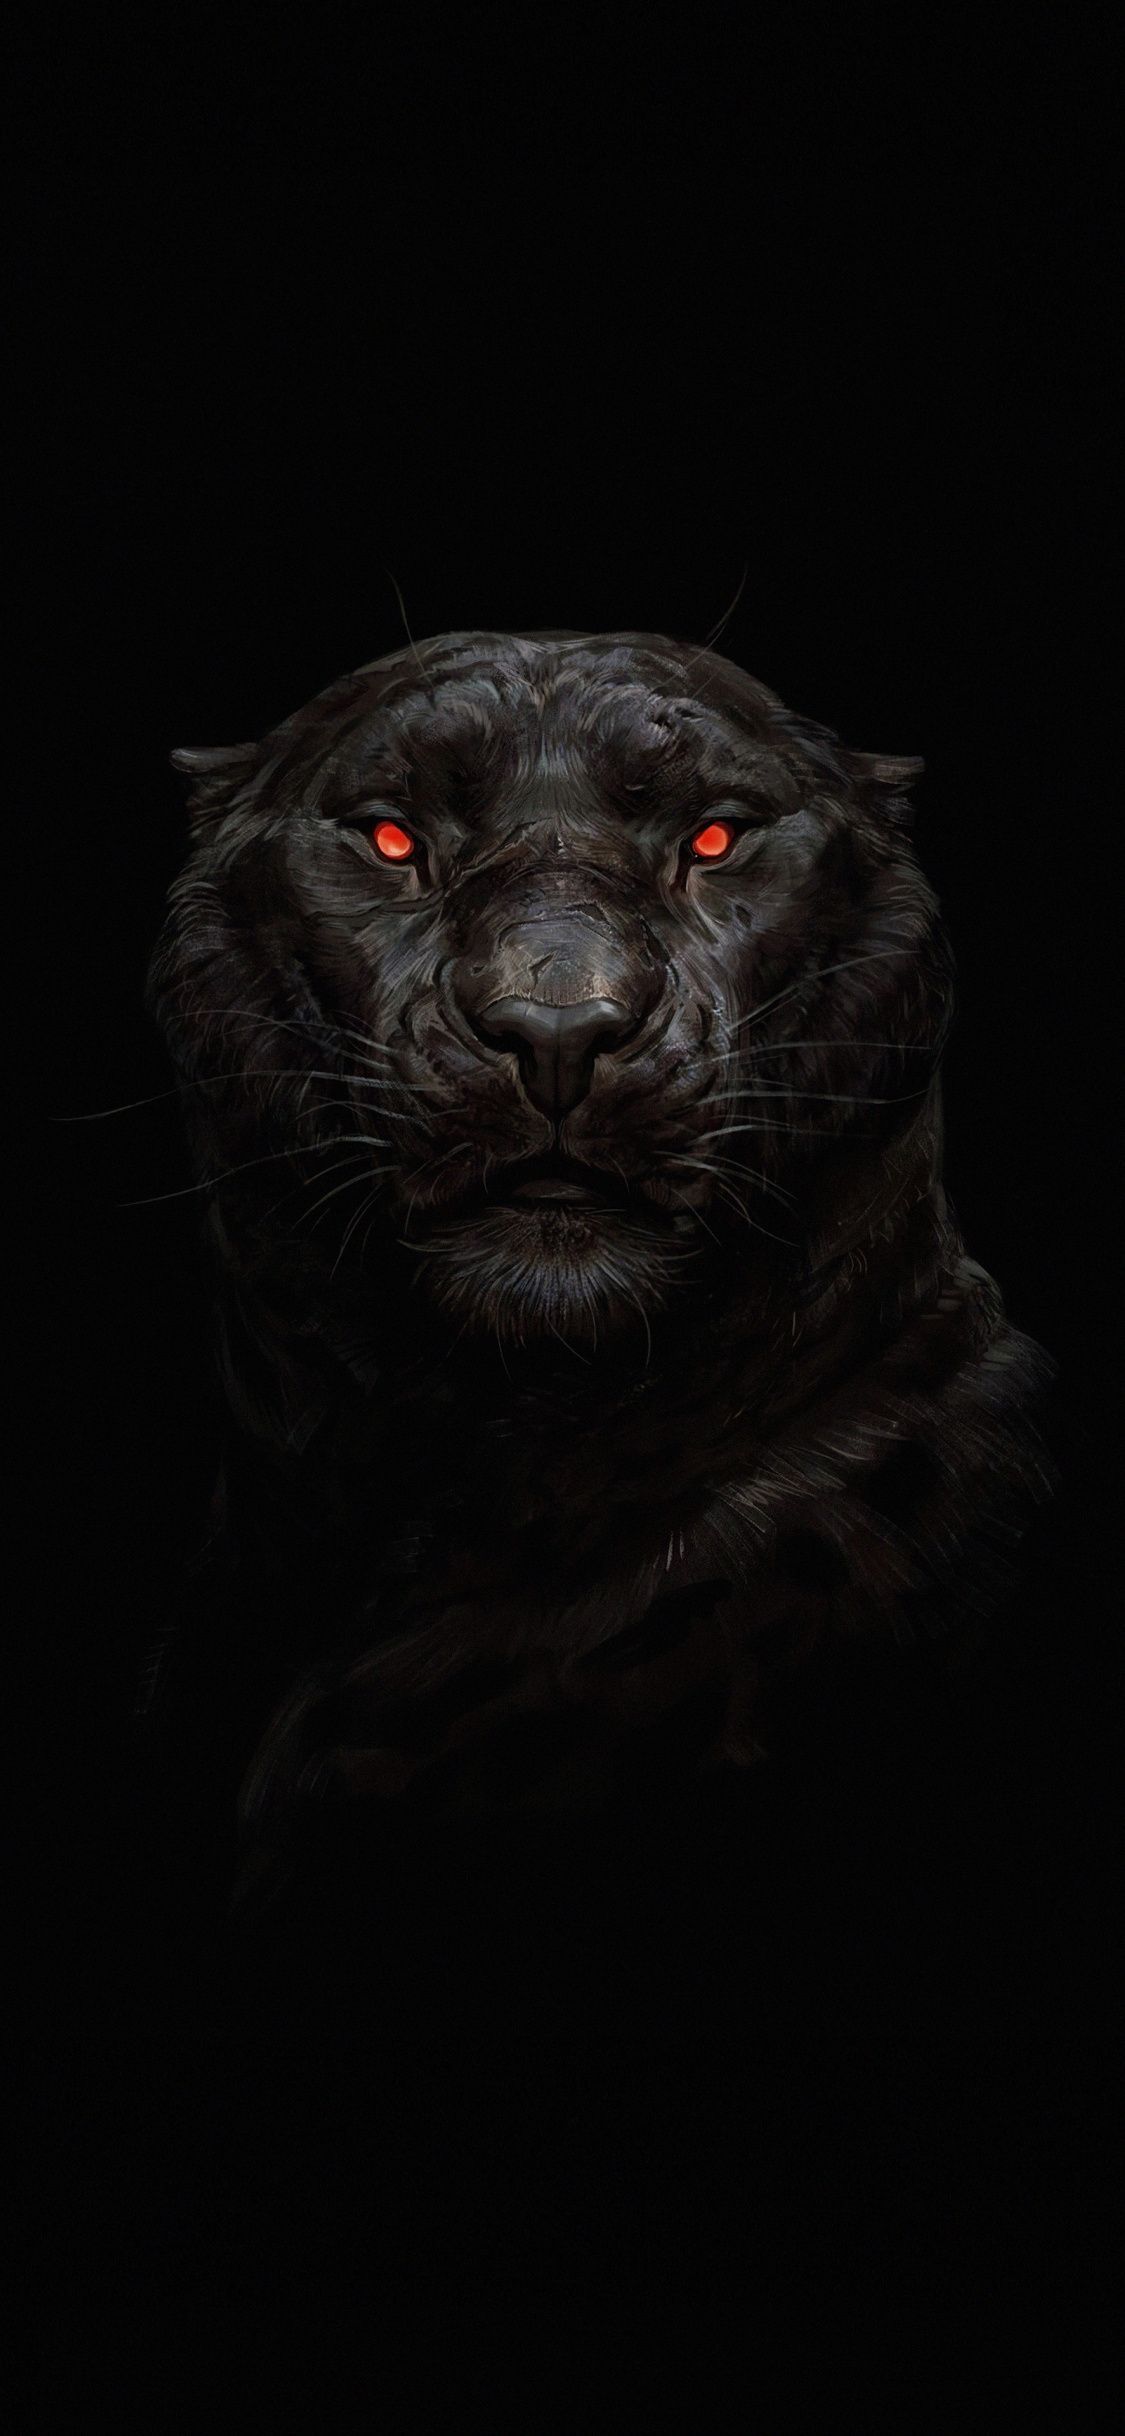 Tiger, glowing red eyes, predator, dark wallpaper